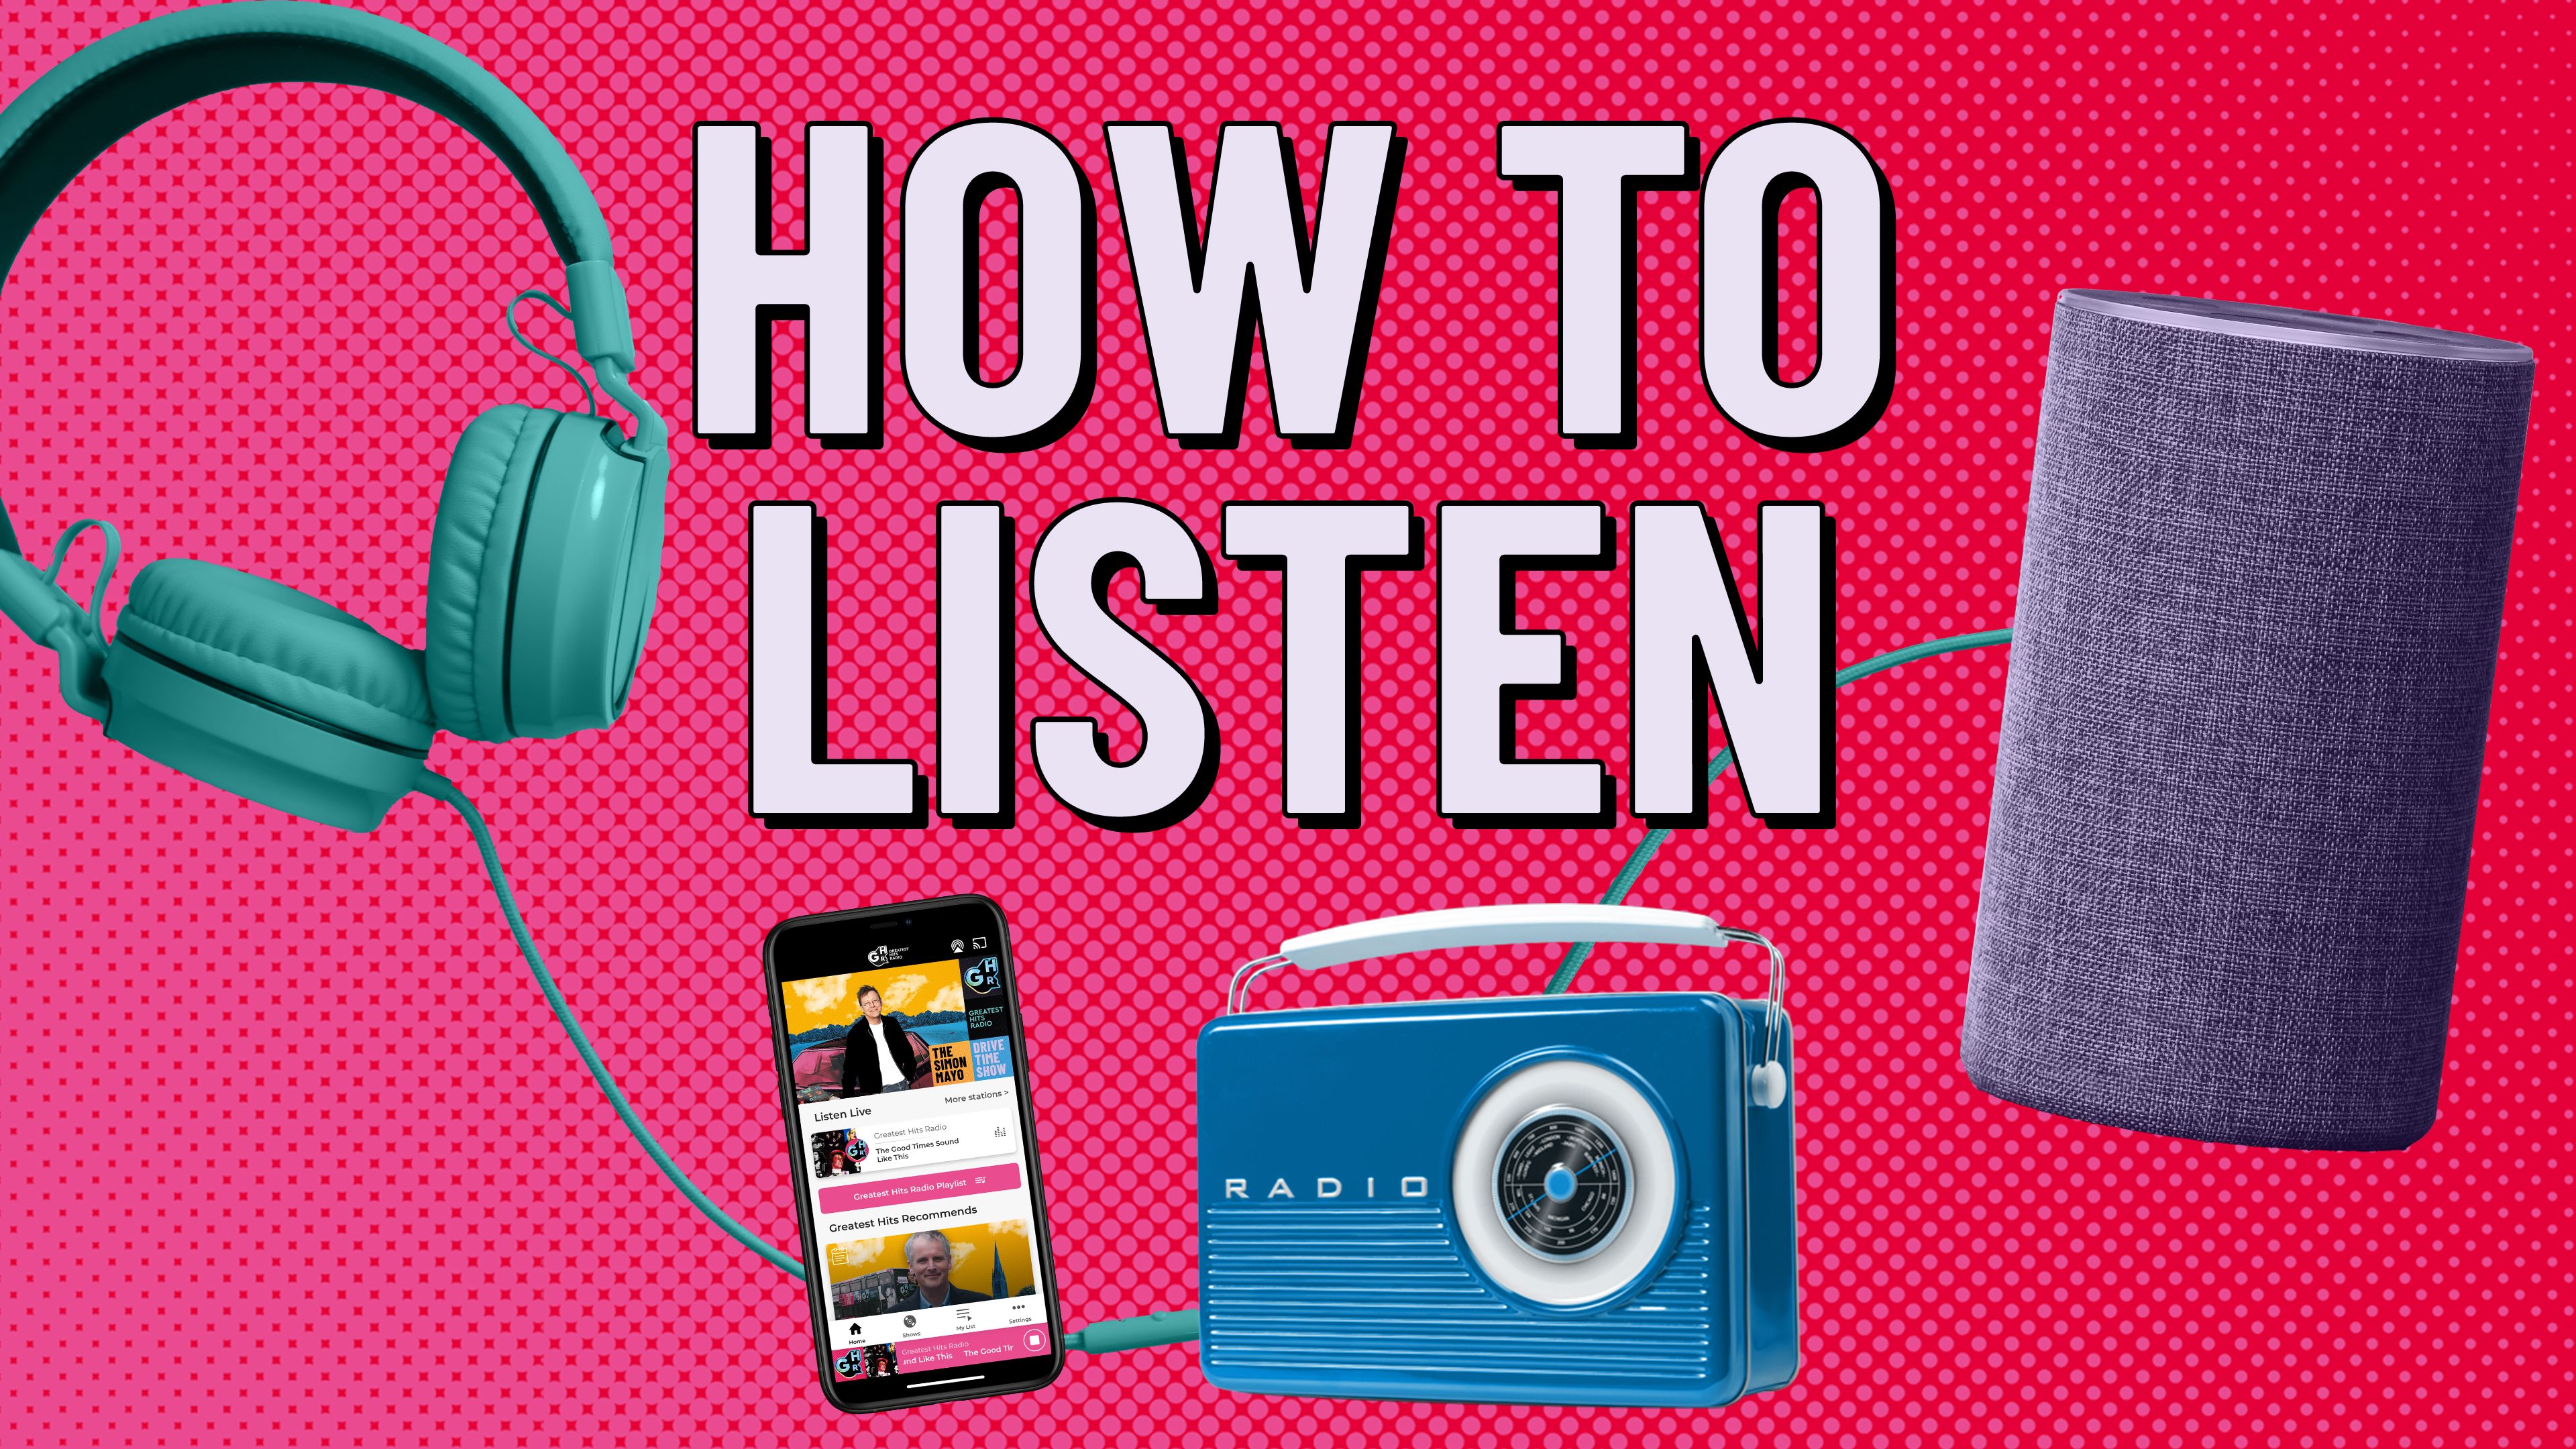 Ir al circuito retorta Contracción Greatest Hits Radio guide: How can I listen to Greatest Hits Radio?